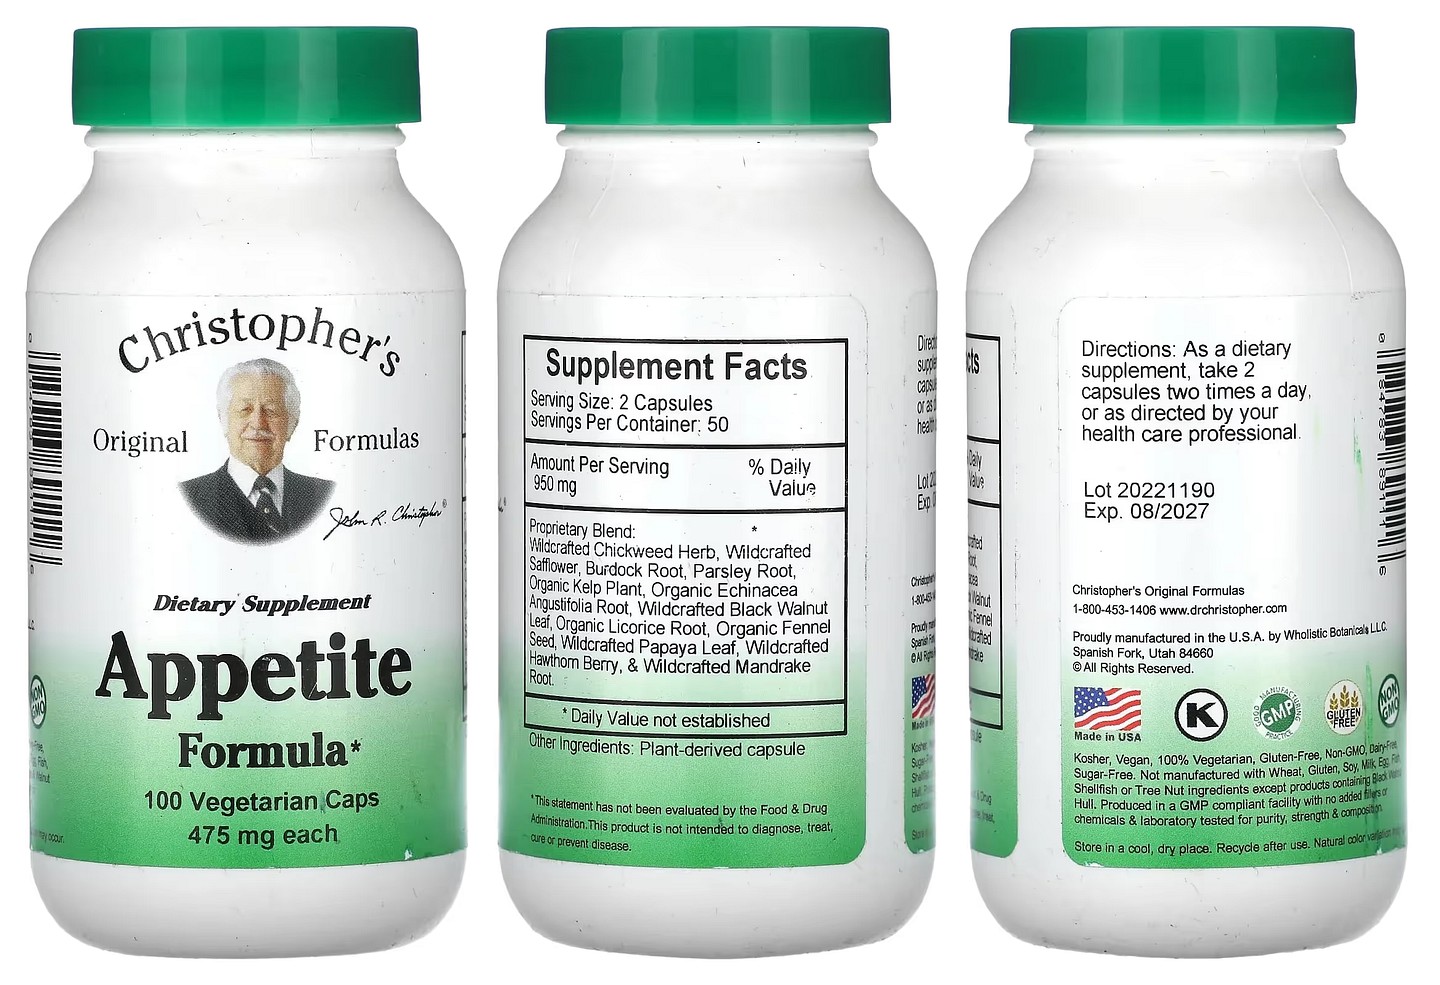 Christopher's Original Formulas, Appetite Formula packaging